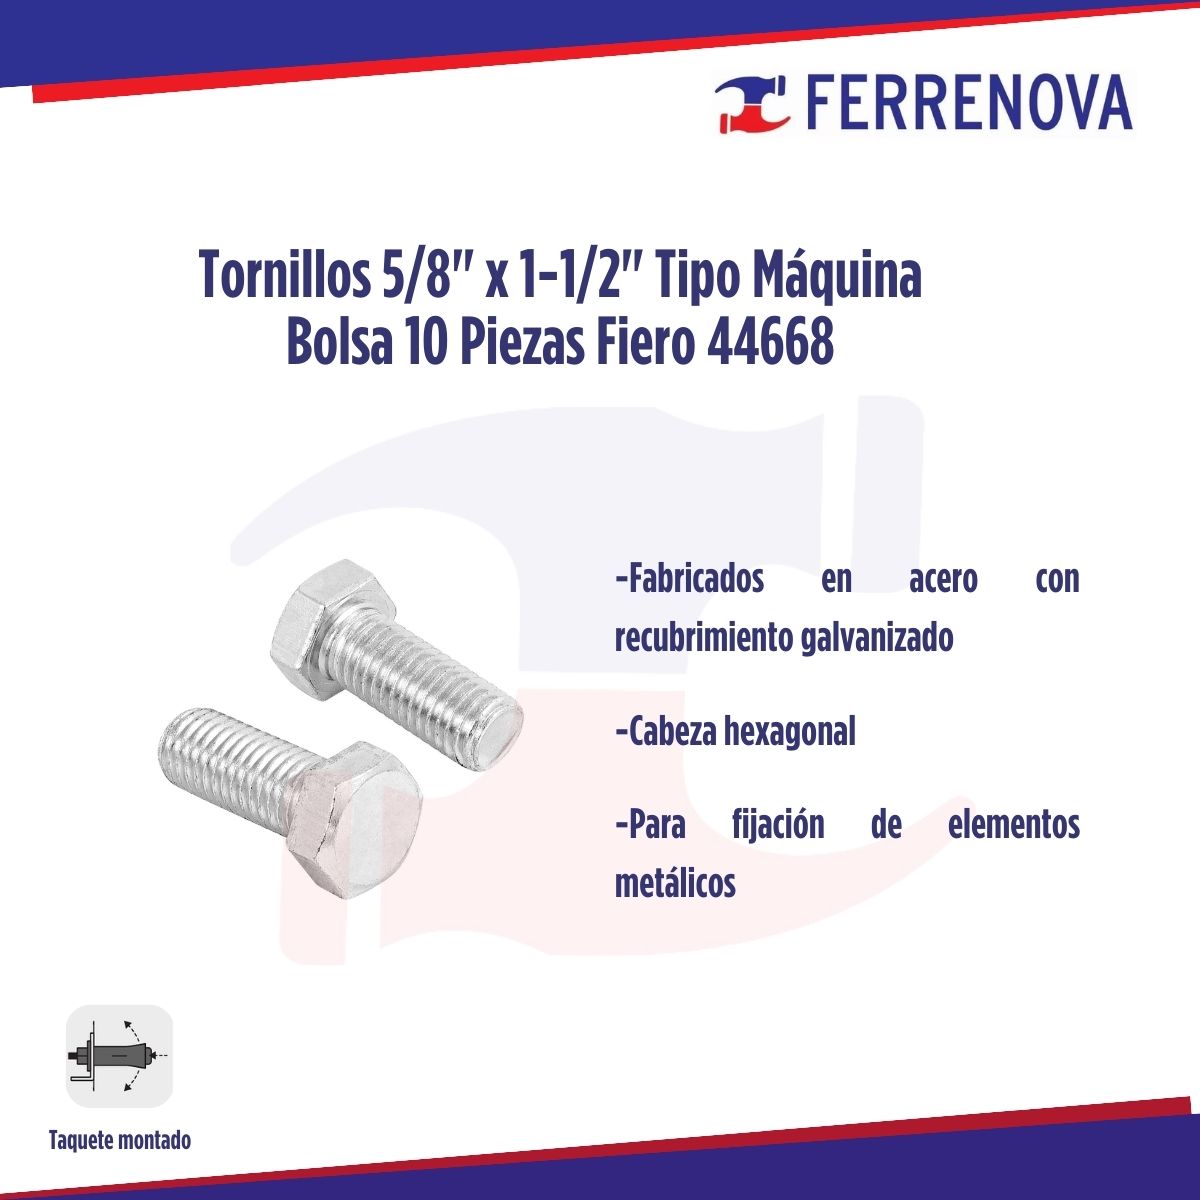 Tornillos 5/8" x 1-1/2" Tipo Máquina Bolsa 10 Piezas Fiero 44668